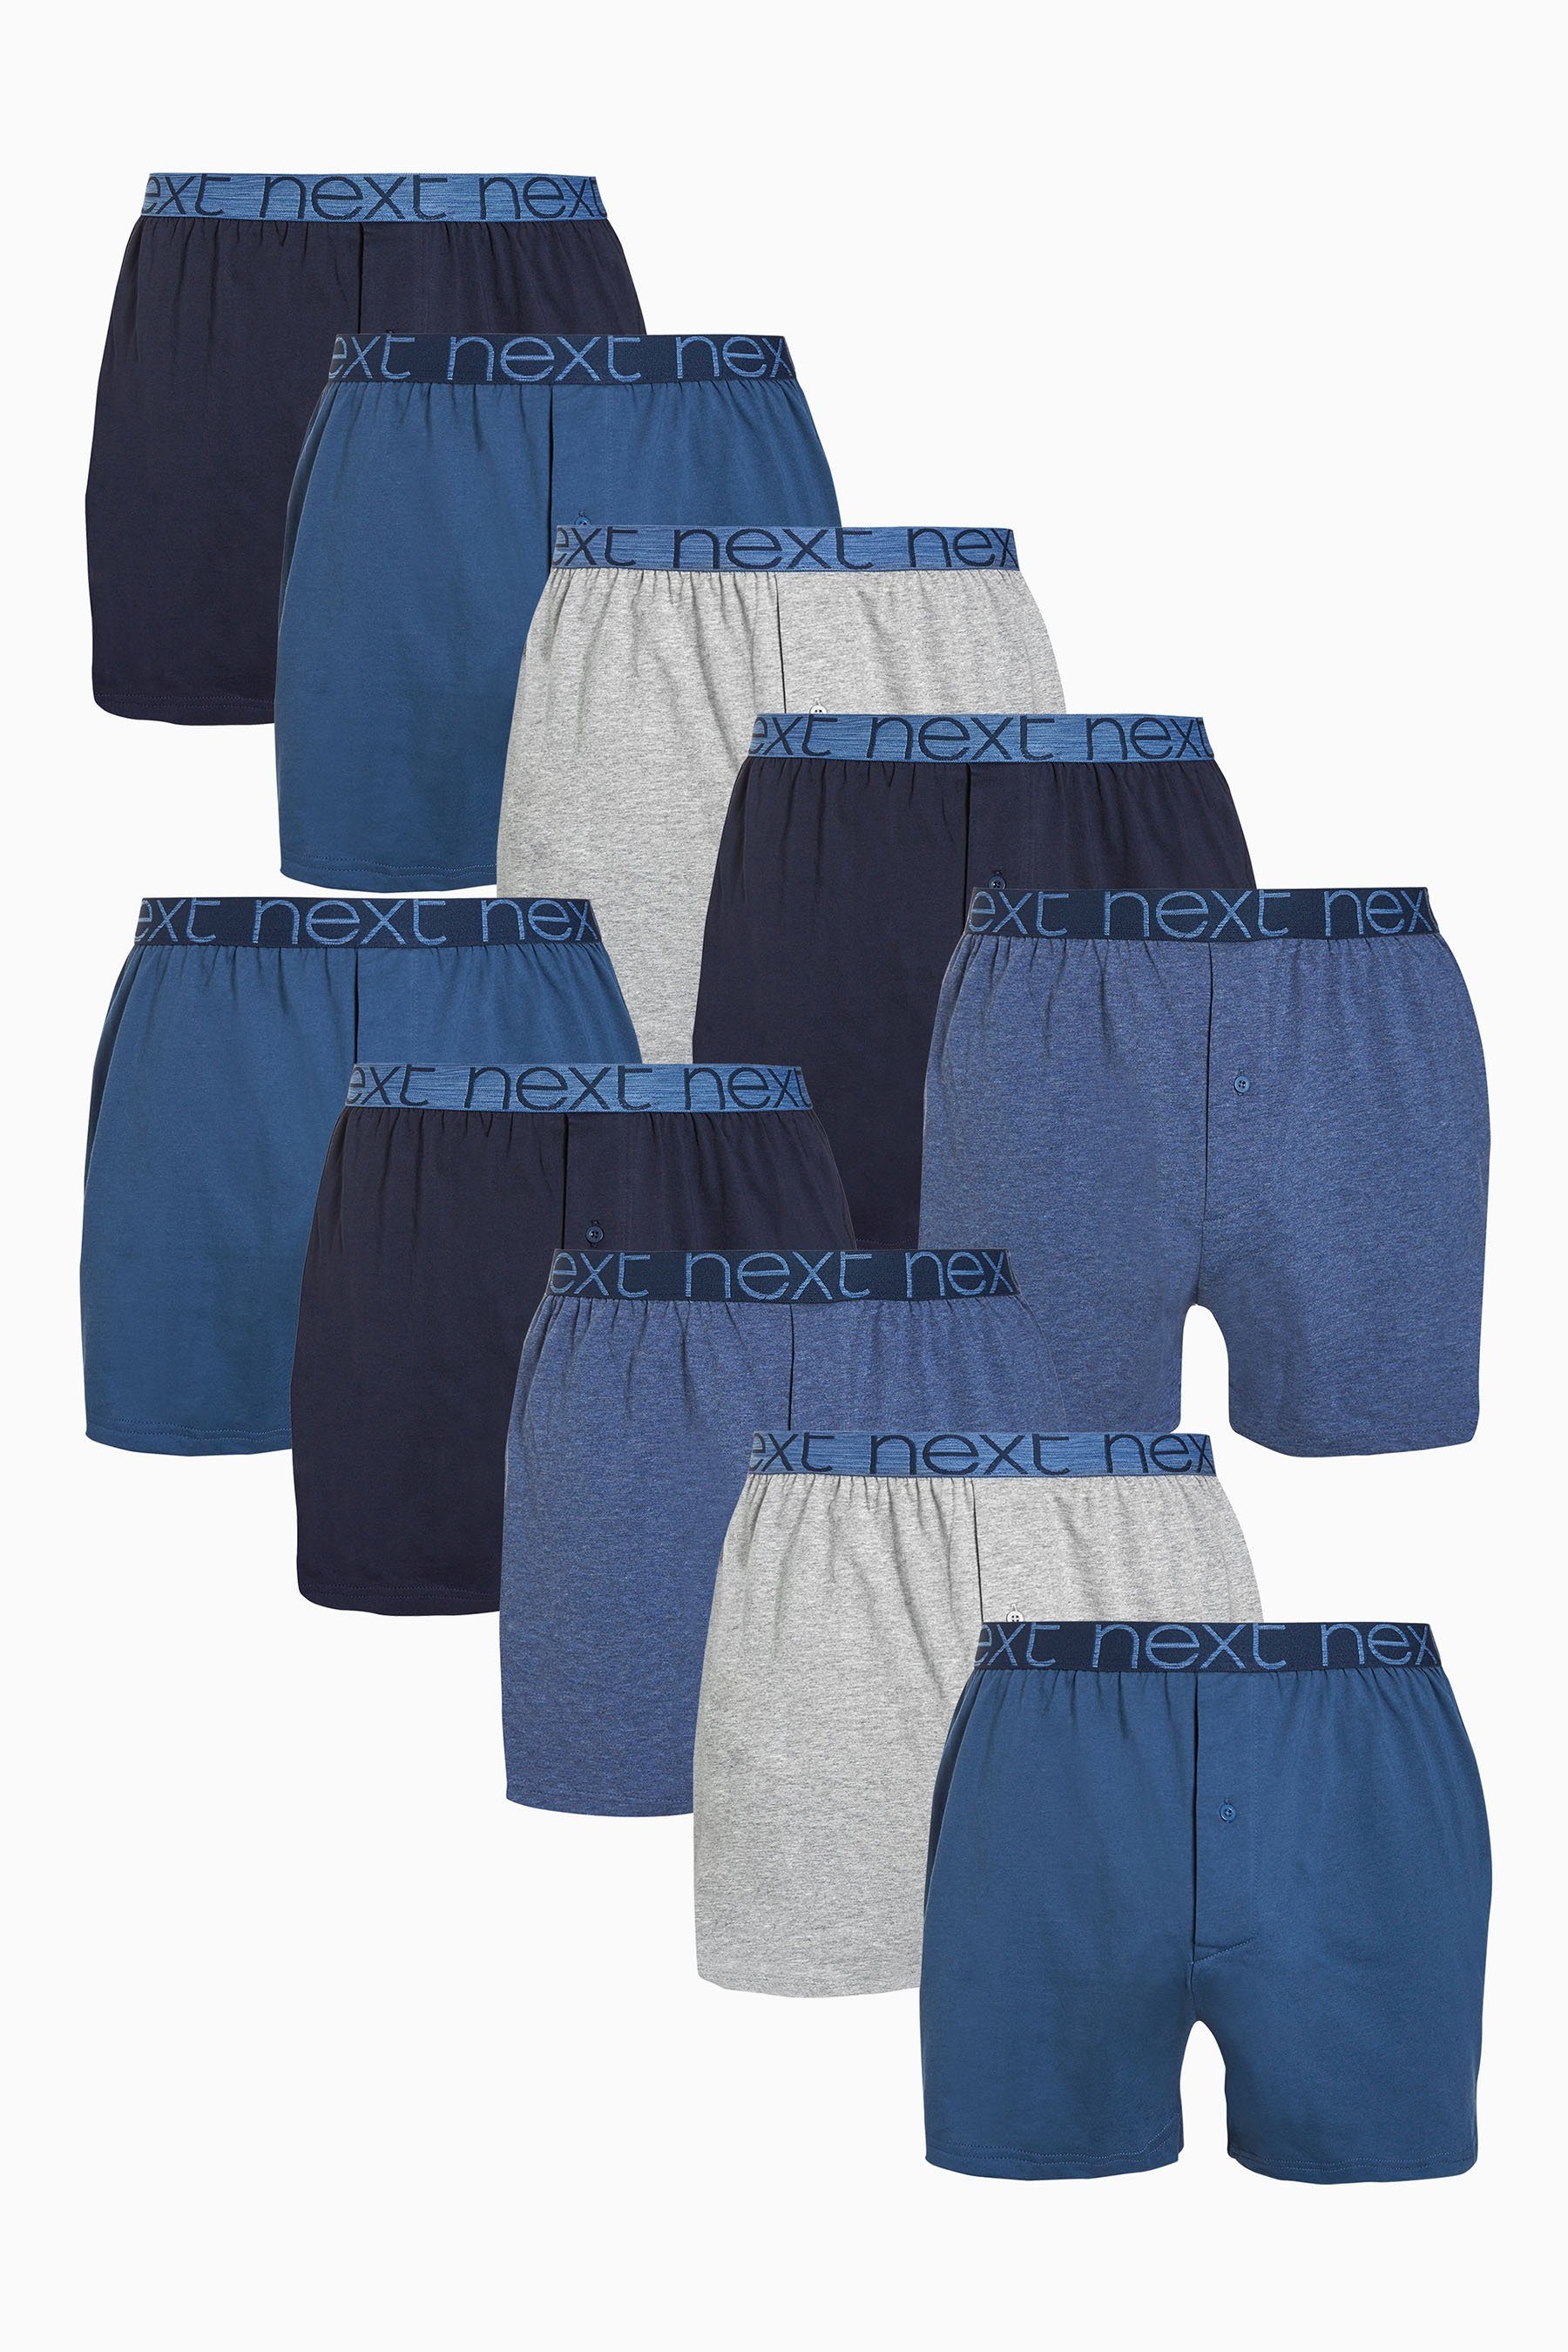 Next (10-St) Loose Blue Boxershorts Boxershorts aus Fit reiner Baumwolle,